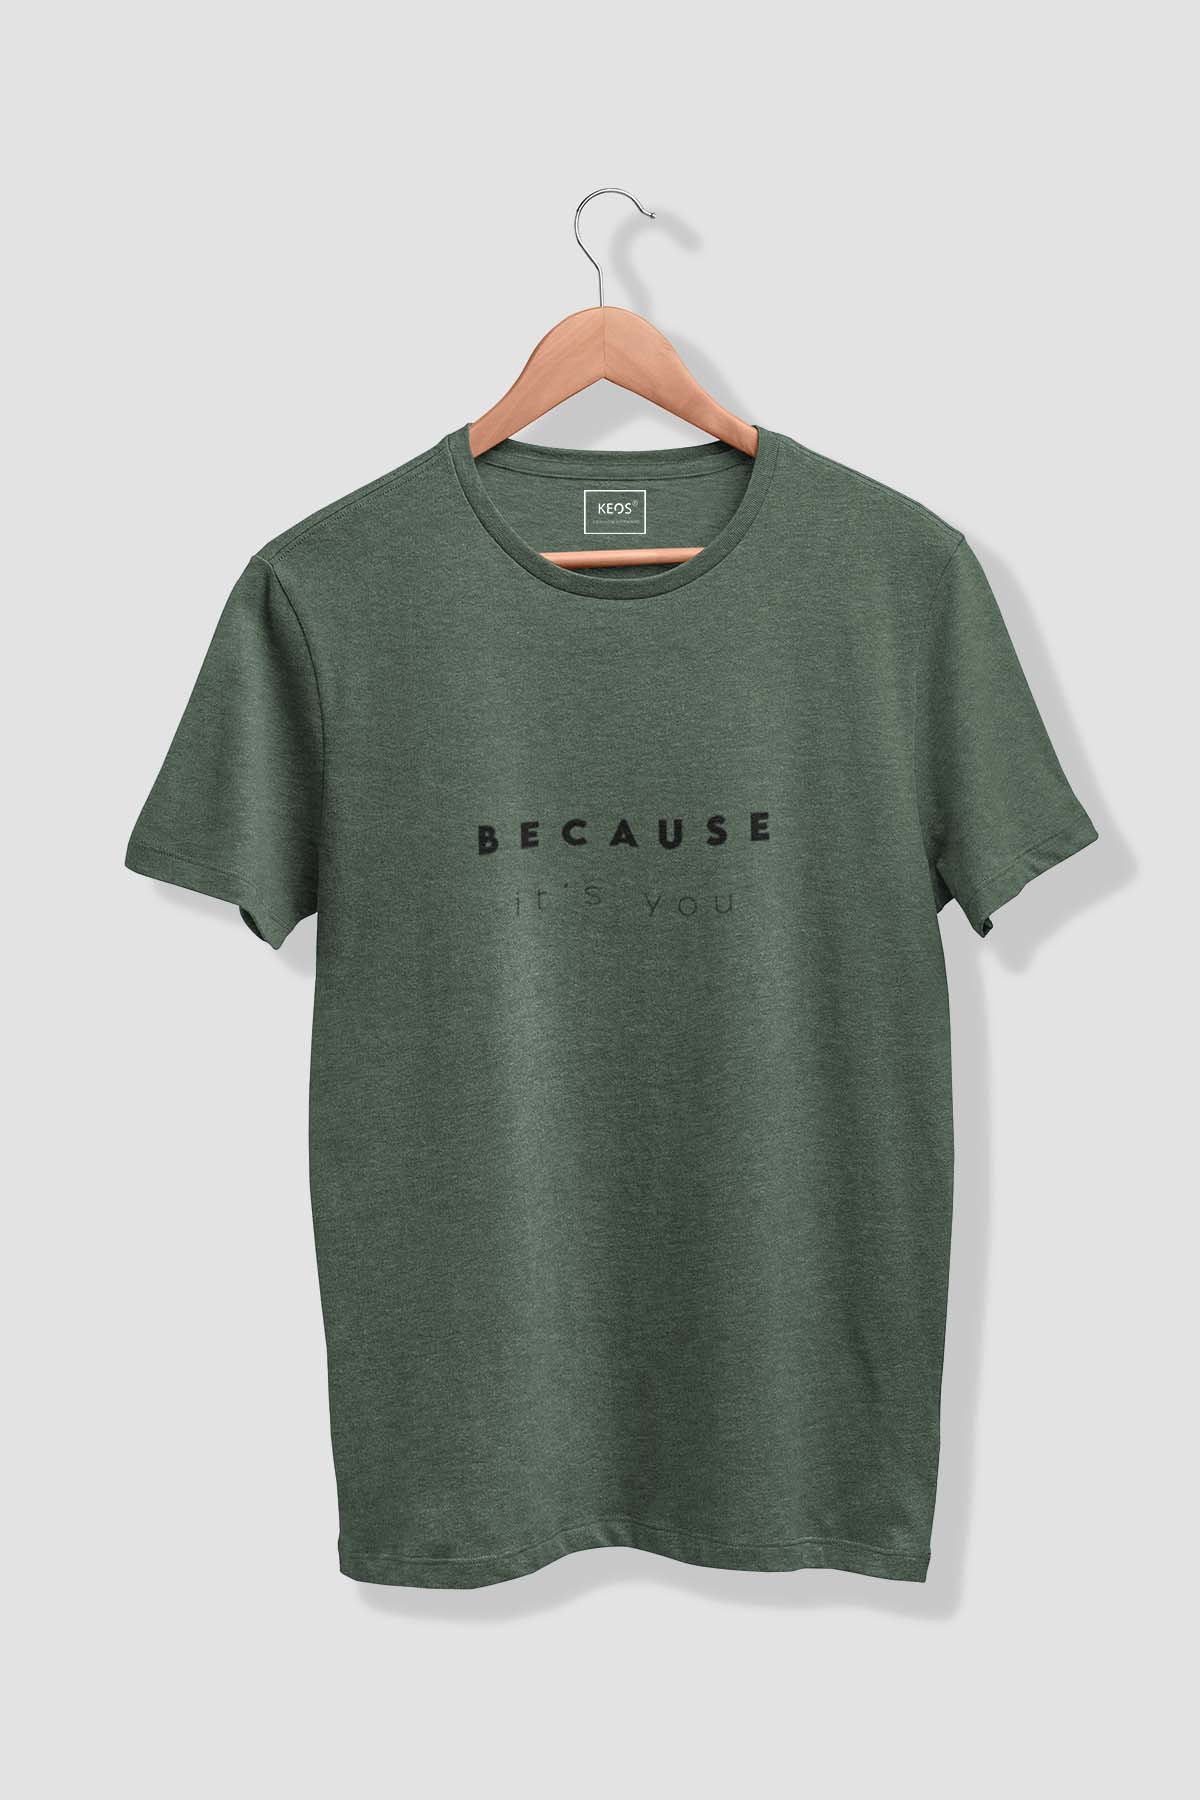 Because it's you - Melange Cotton T-shirt - keos.life